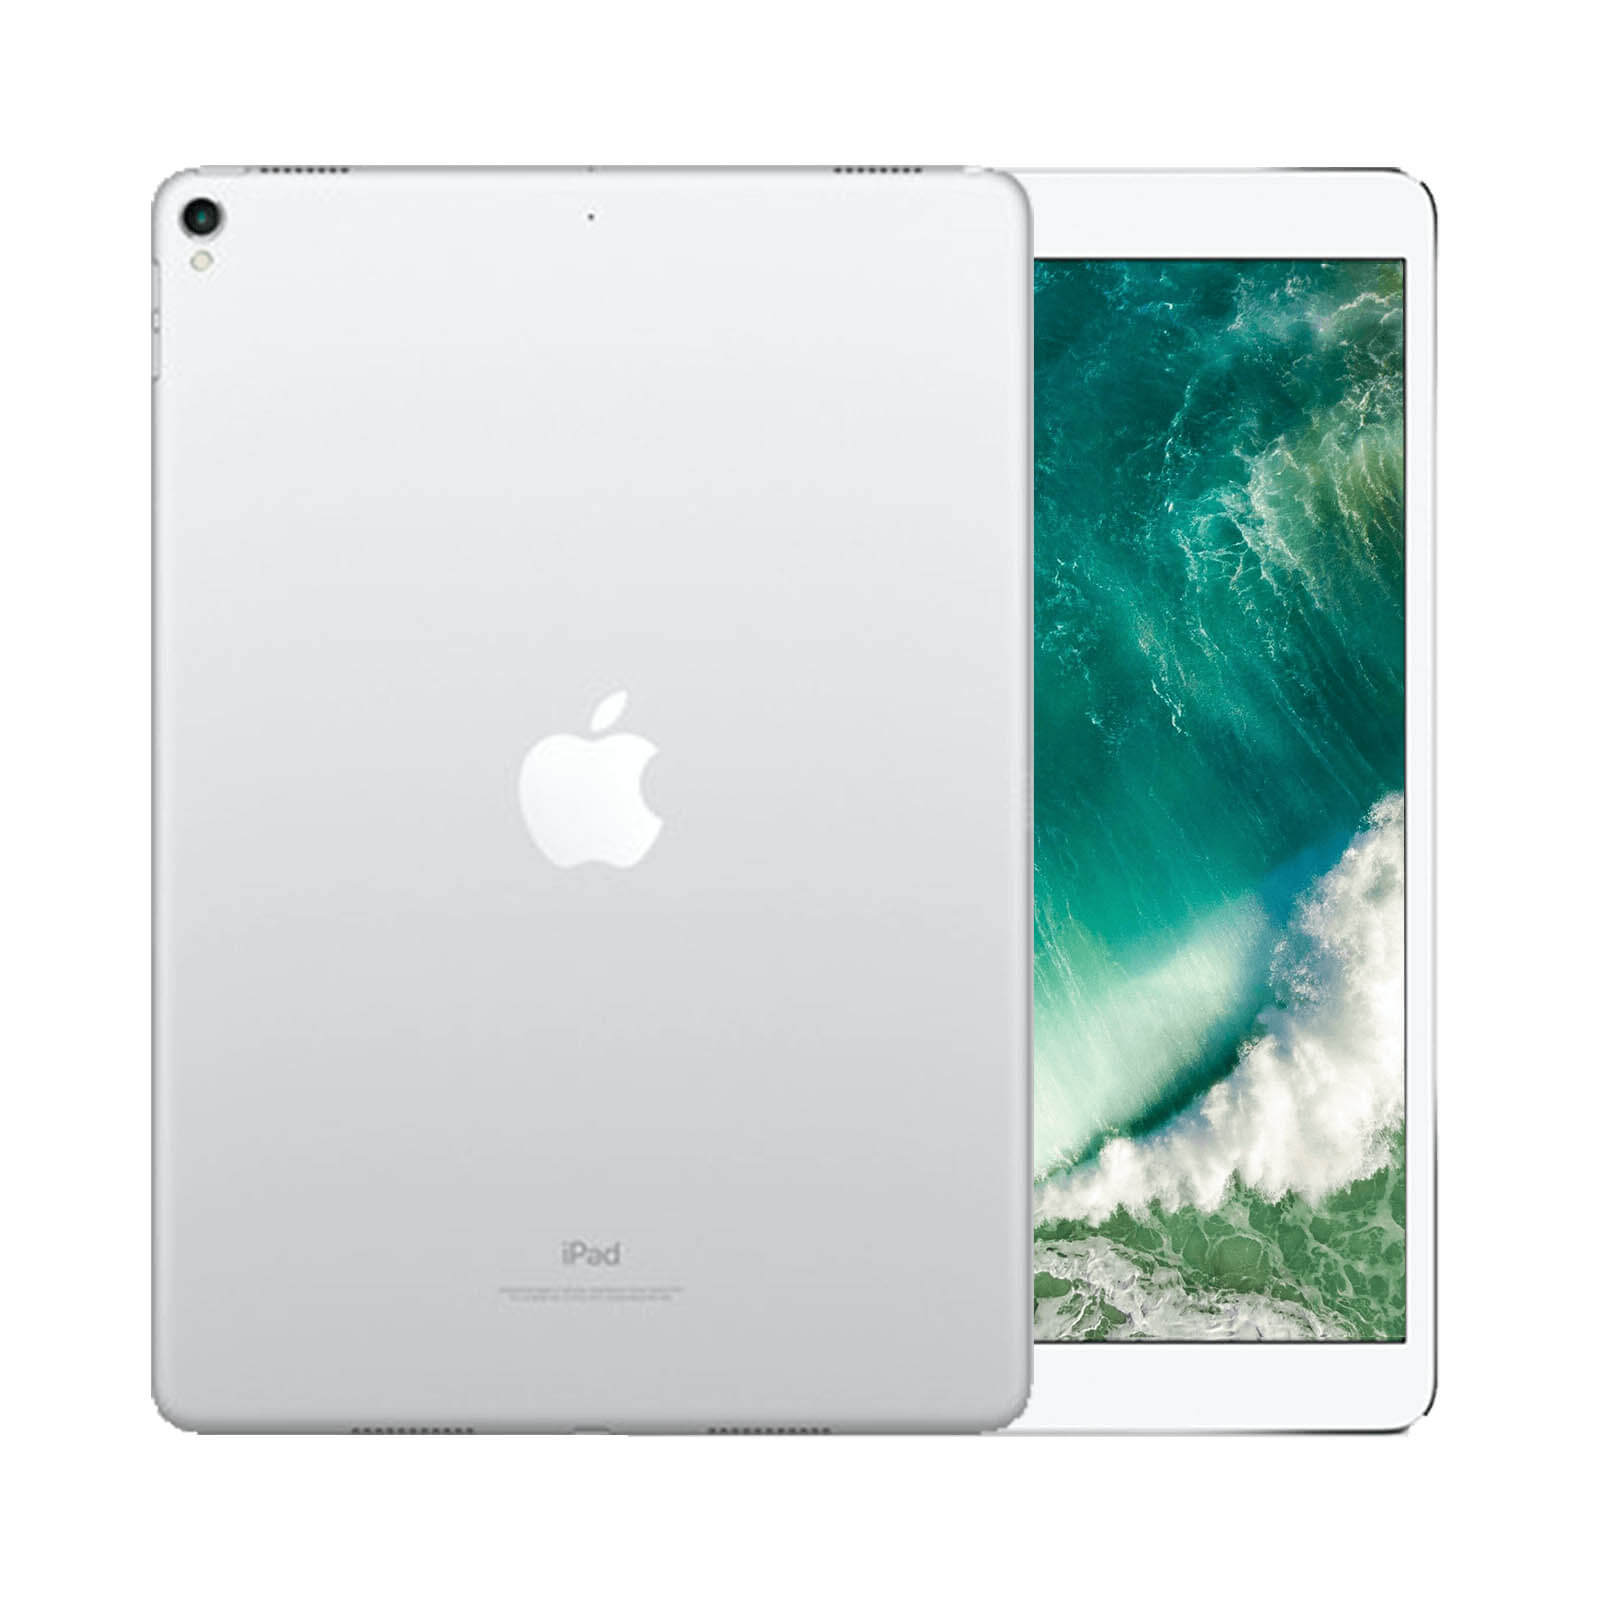 iPad Pro 11 Inch 512GB Silver Good - Unlocked 512GB Silver Good